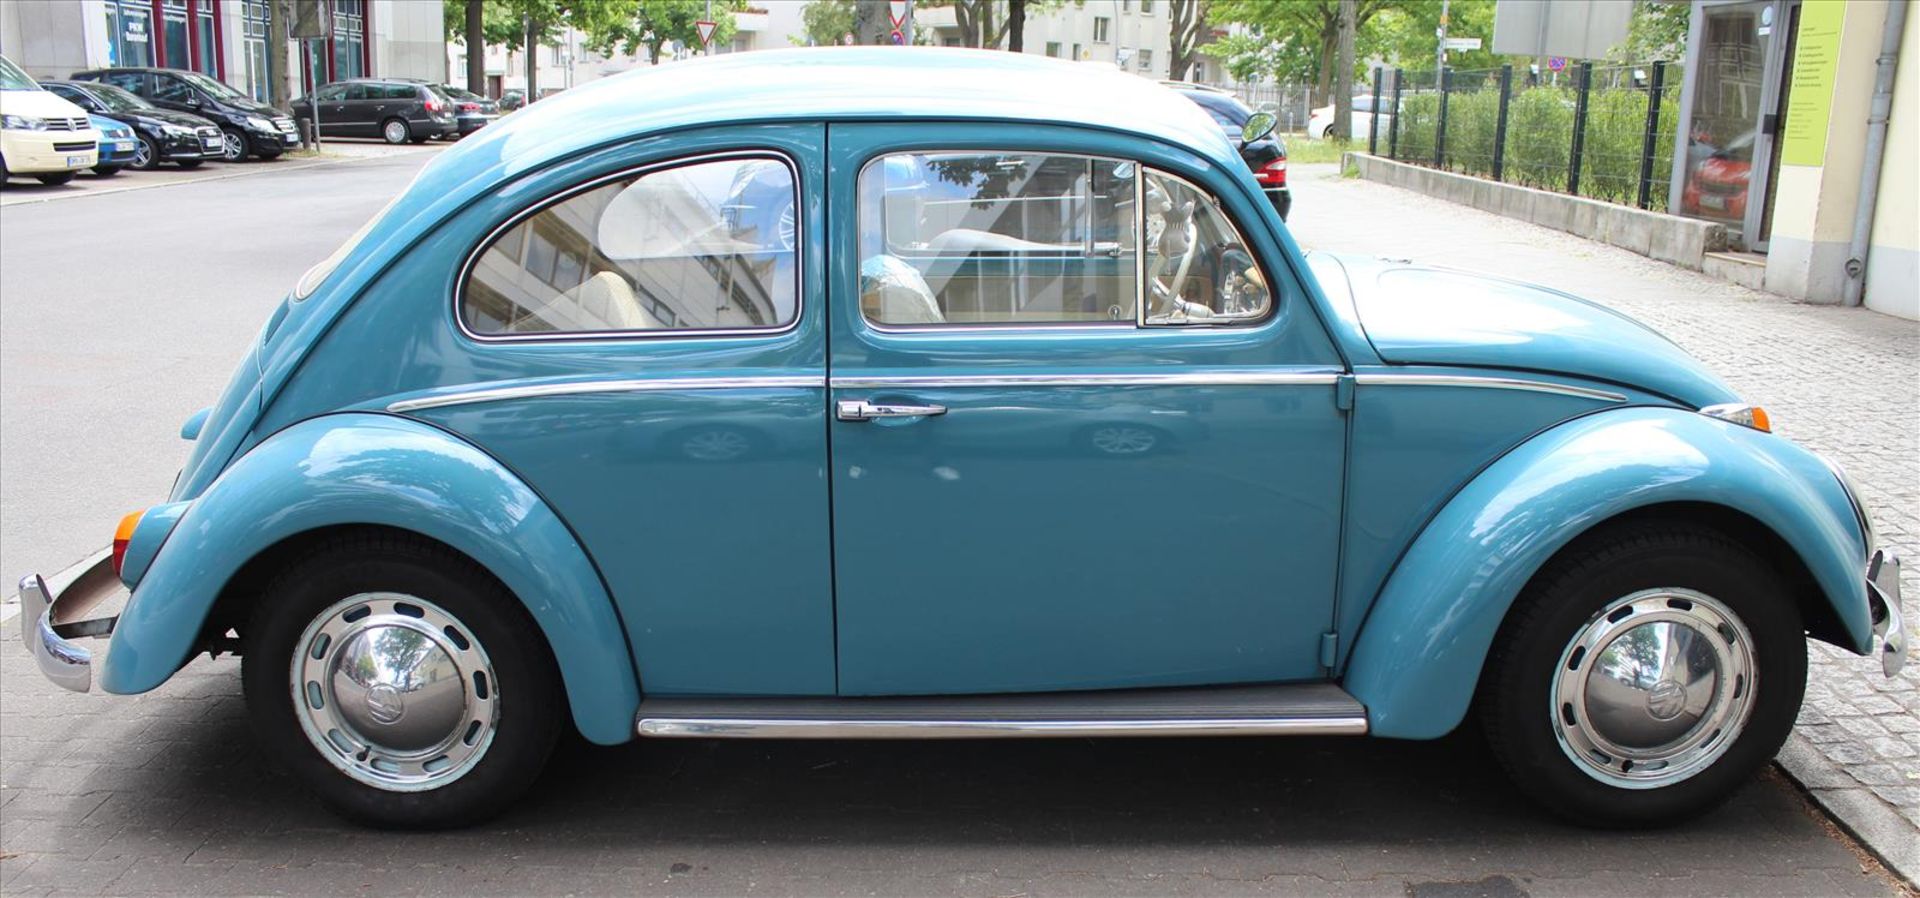 Originaler Käfer-Oldtimer, Volkswagen. - Bild 5 aus 15